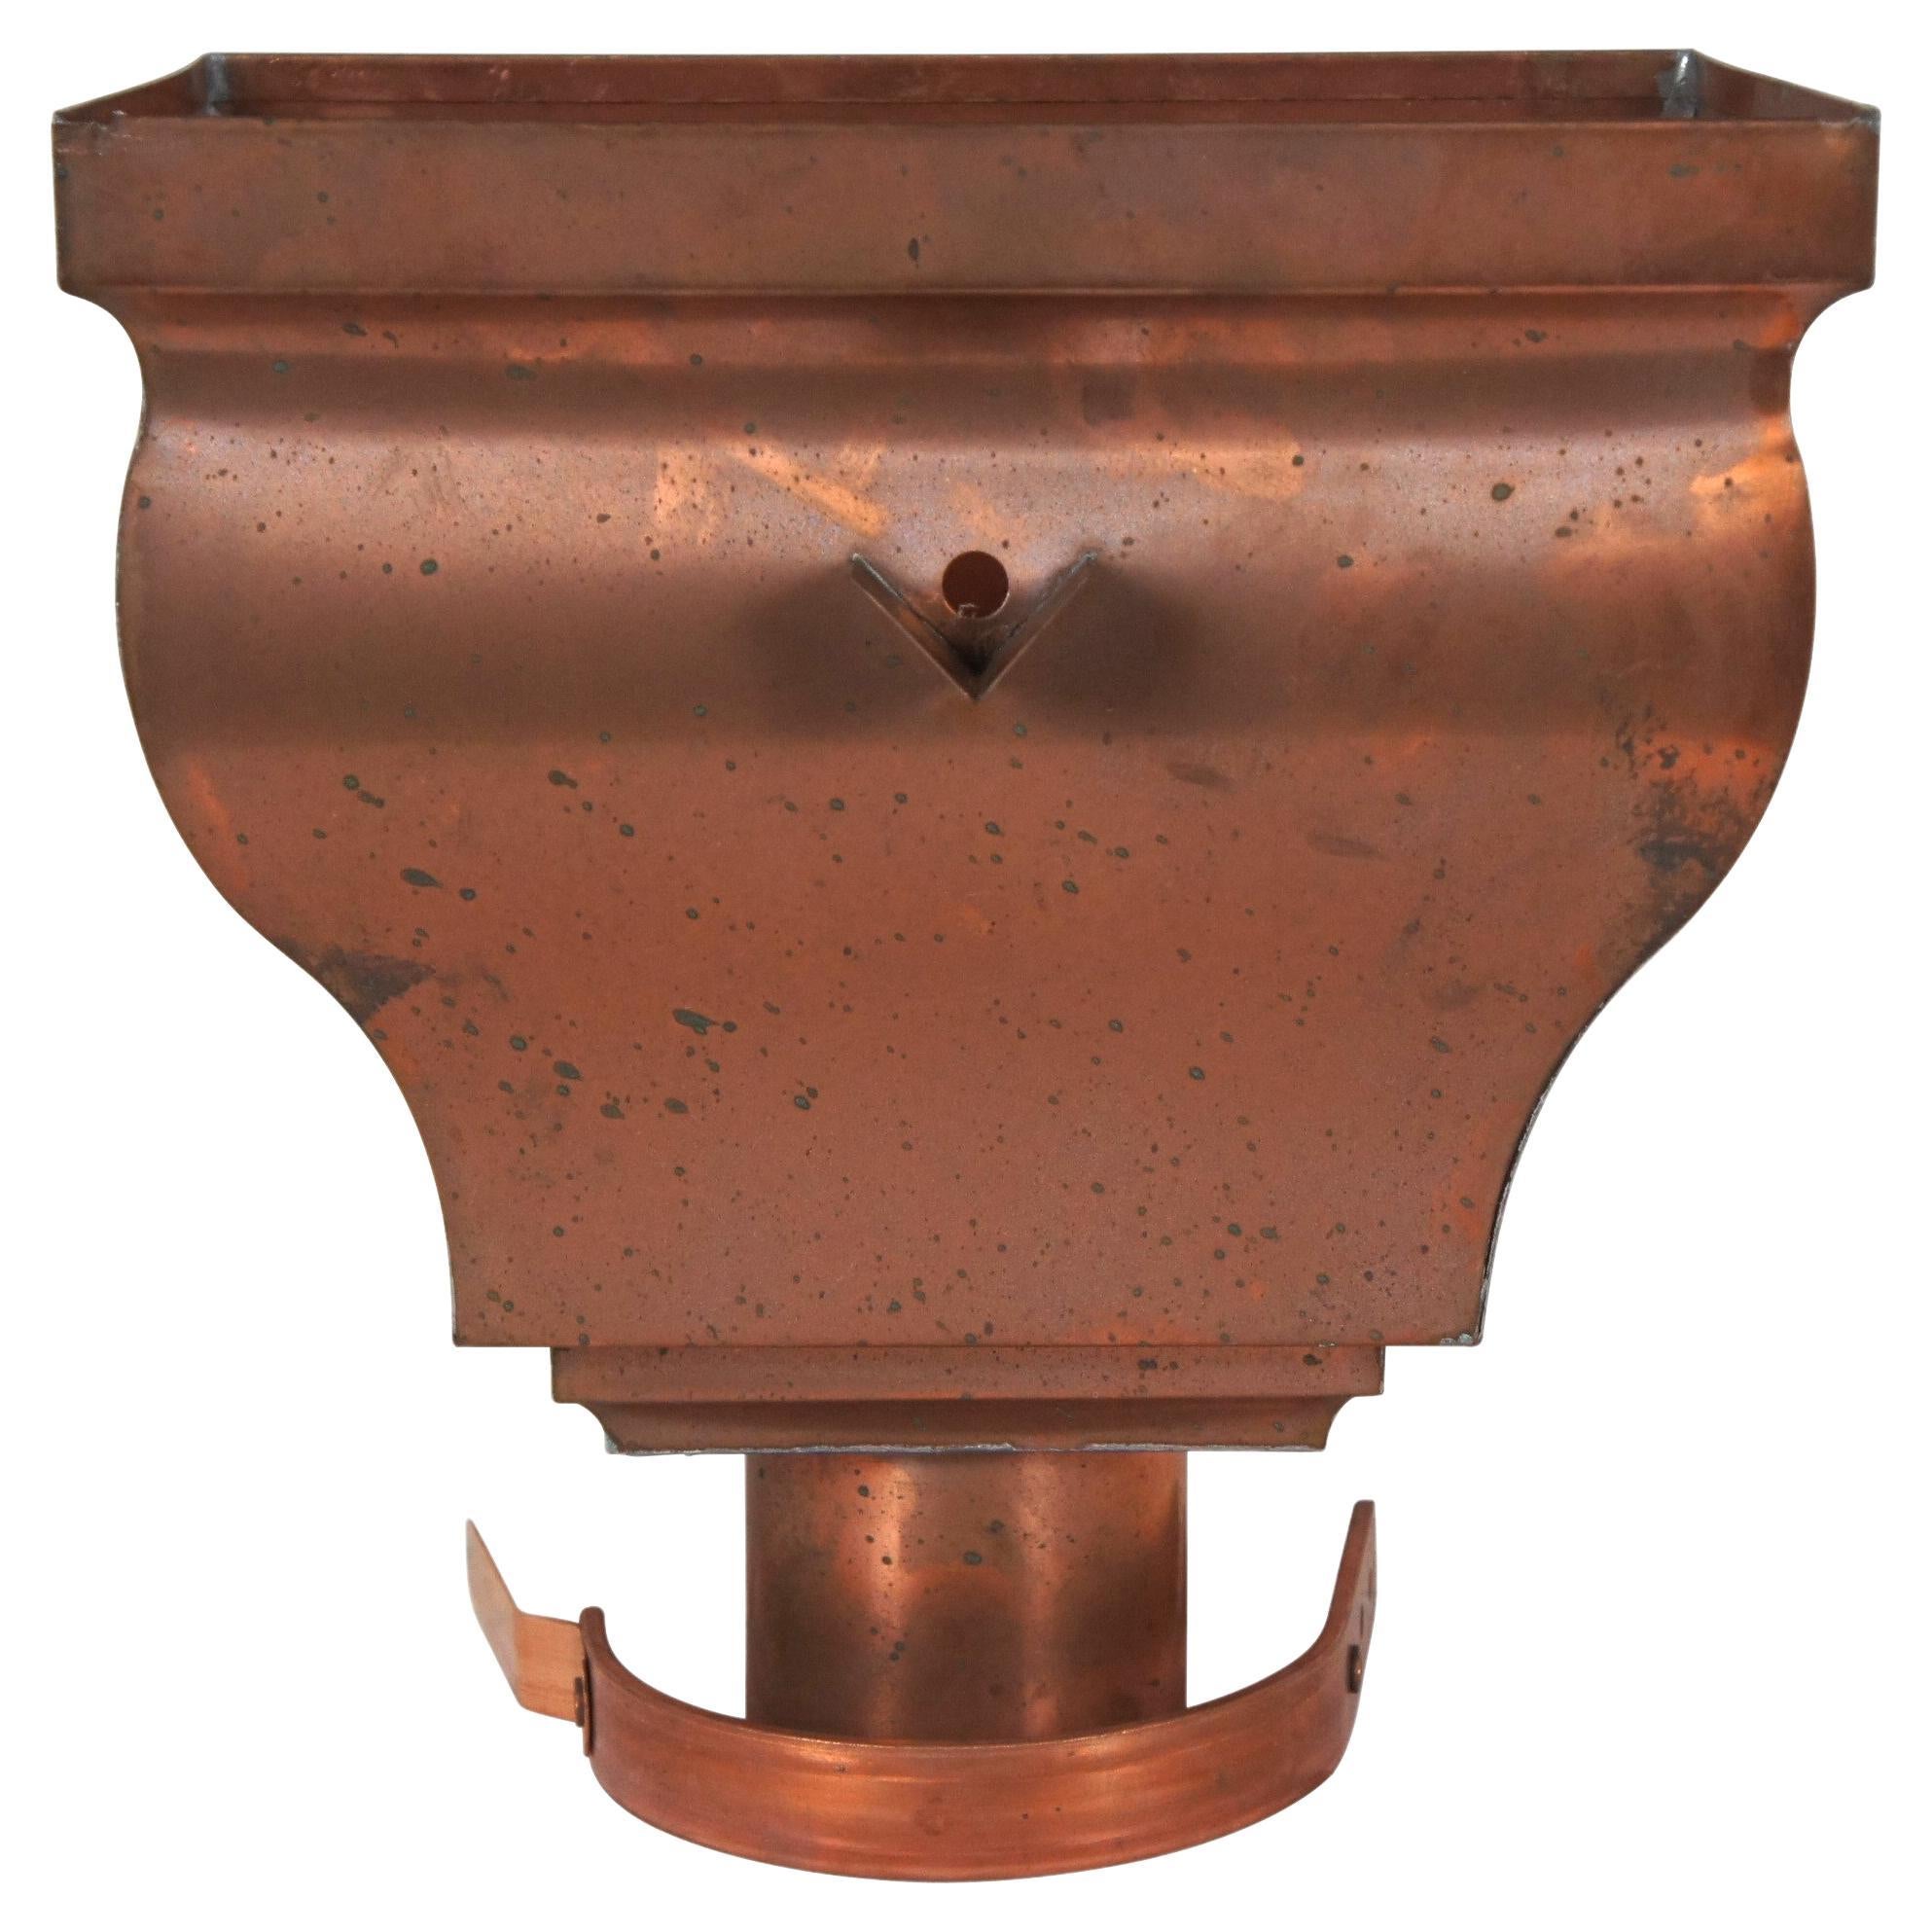 Vintage Copper Gutter Leader Head Hopper w/ Overflow Pipe Outlet Downspout 14"